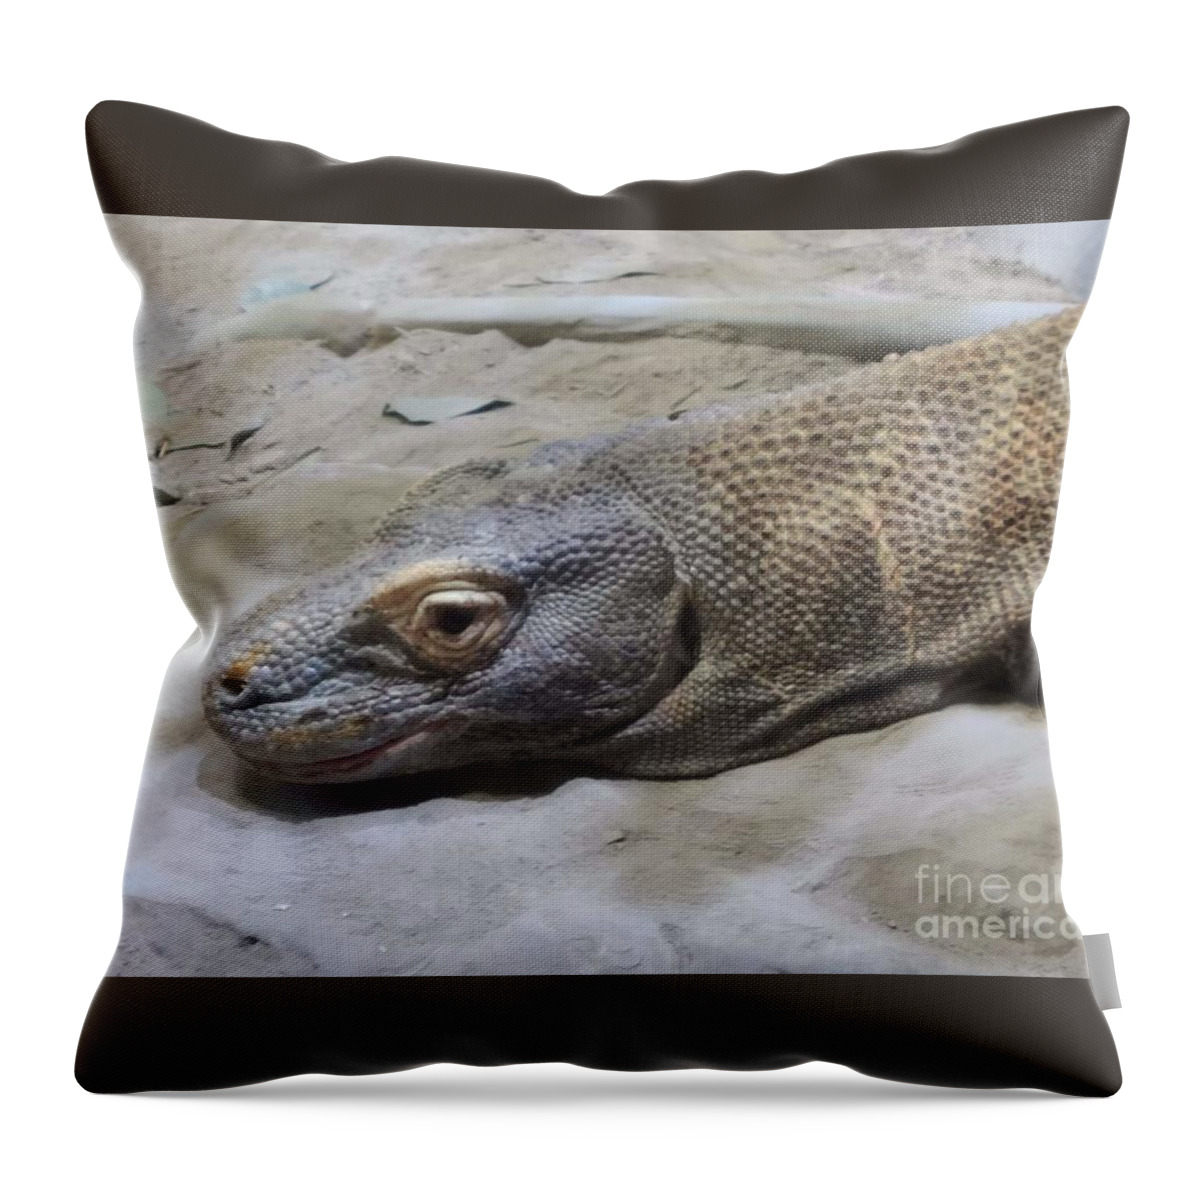 Komodo Throw Pillow featuring the photograph Chilling with a Komodo Dragon by Elena Pratt